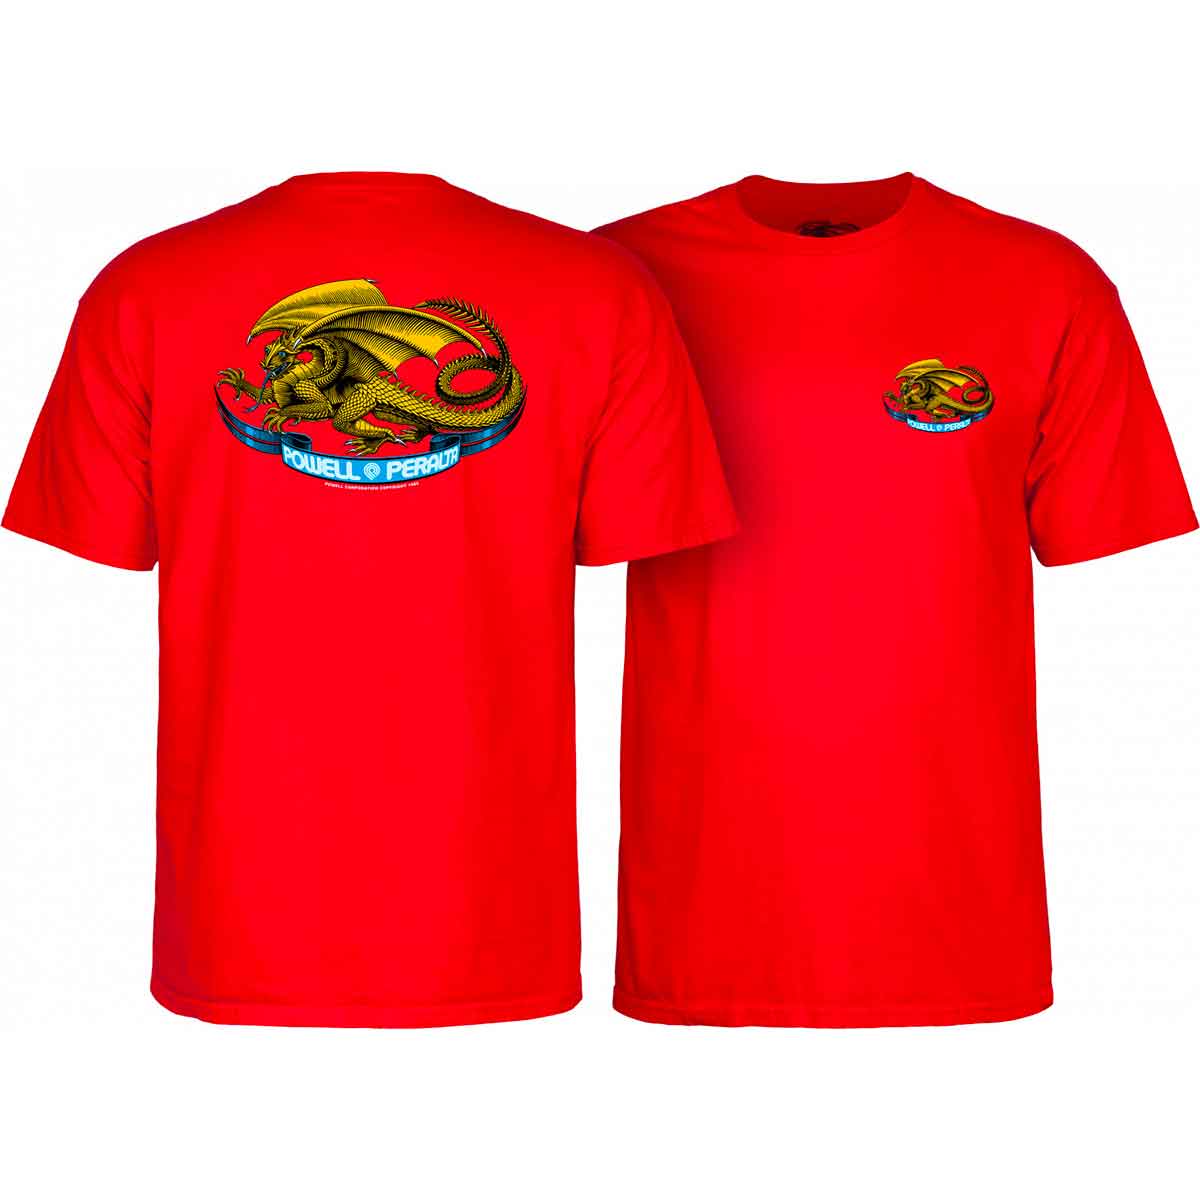 Oval Dragon POWELL PERALTA Skateboard Tee T Shirt Bones Brigade 